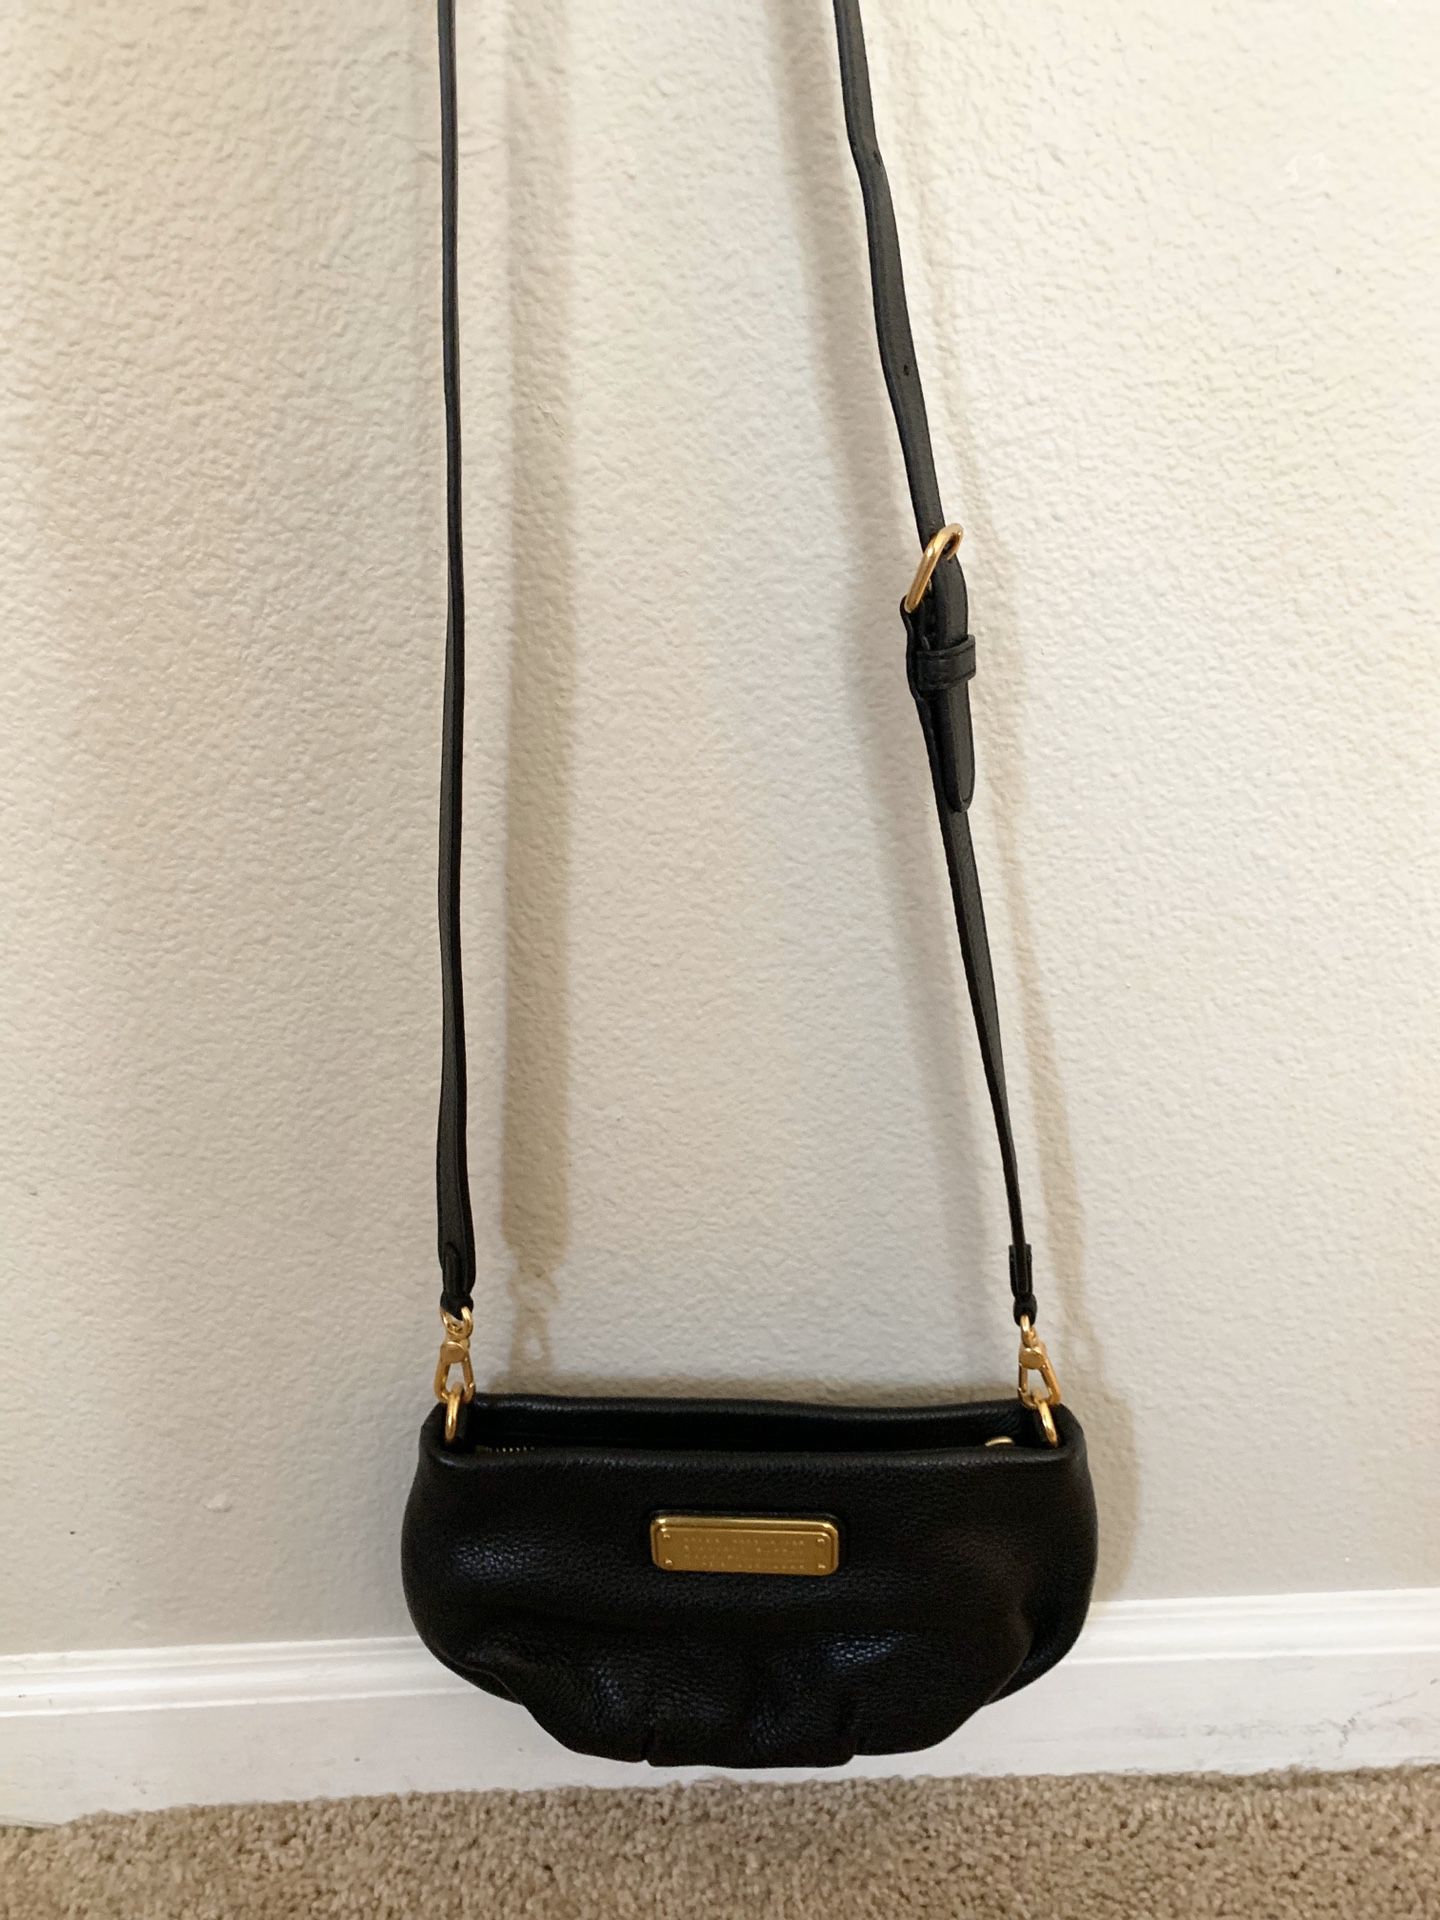 Marc Jacobs clutch/evening bag/crossbody leather purse